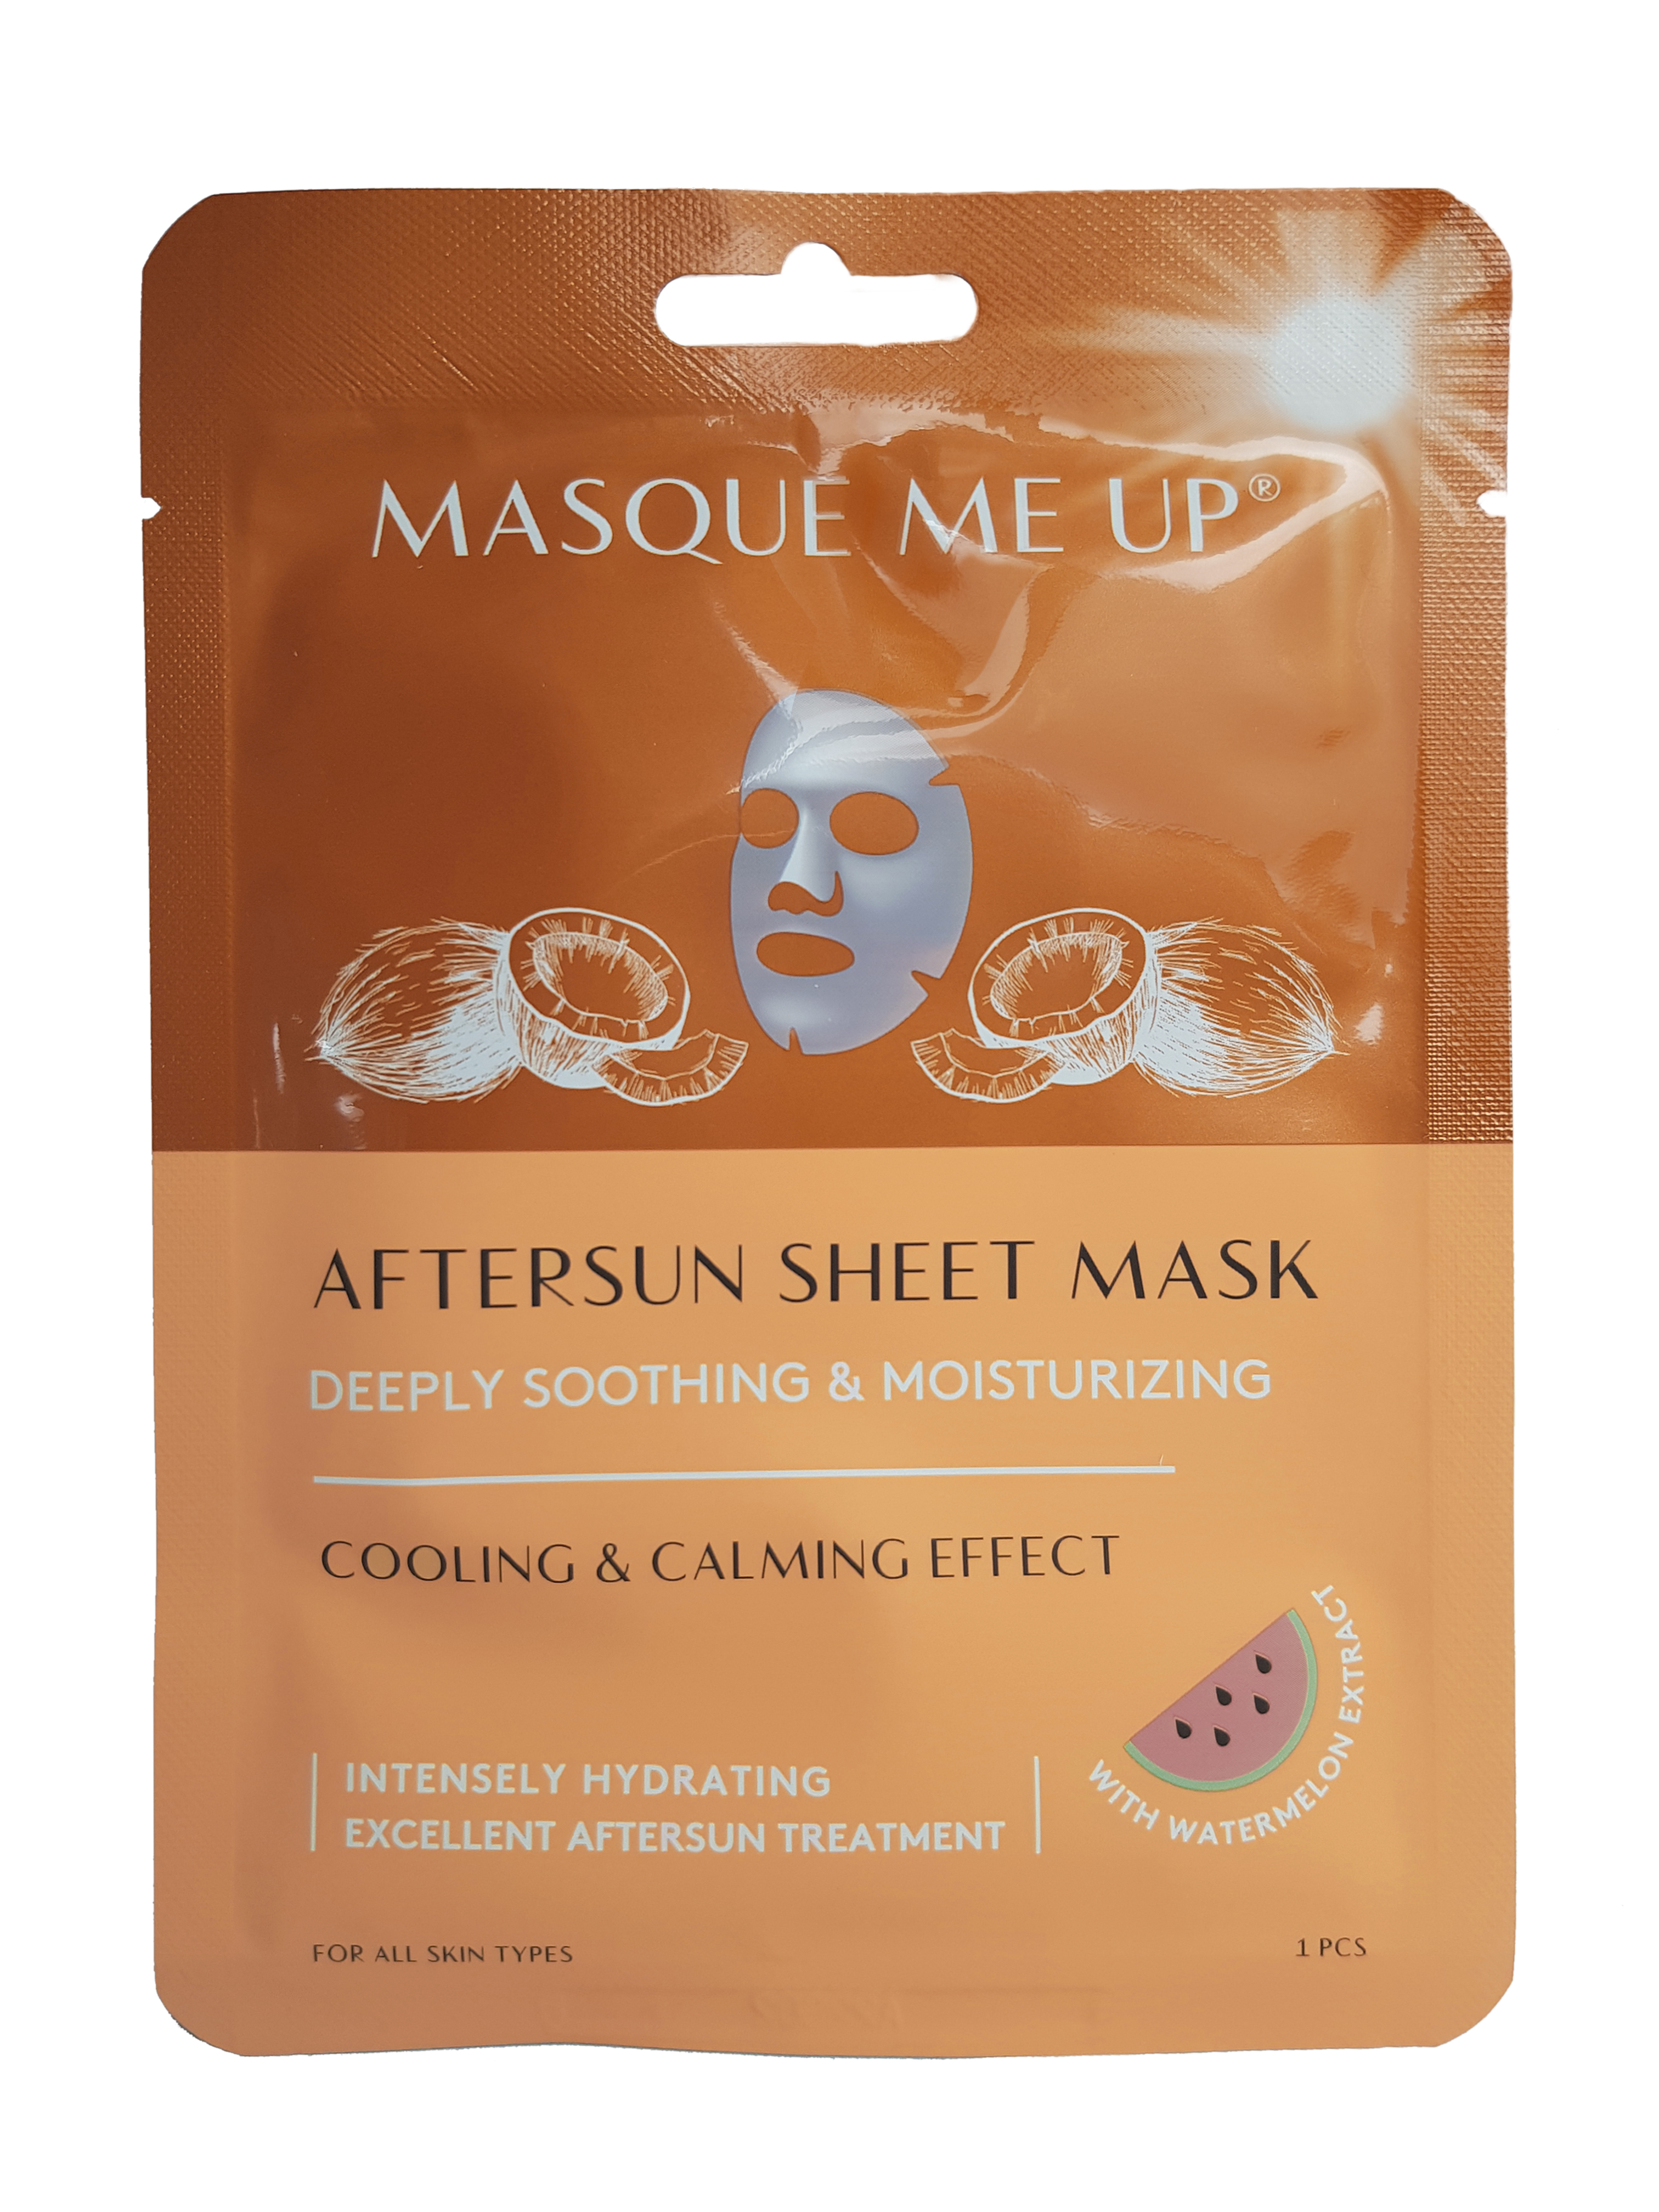 Masque Me Up Aftersun Sheet Mask, 25